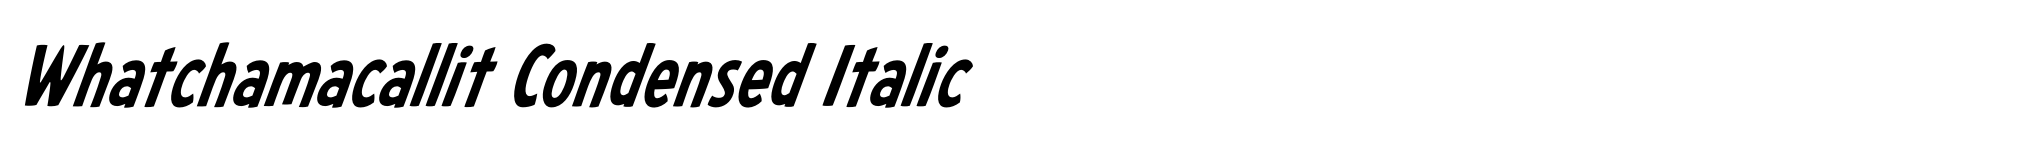 Whatchamacallit Condensed Italic image